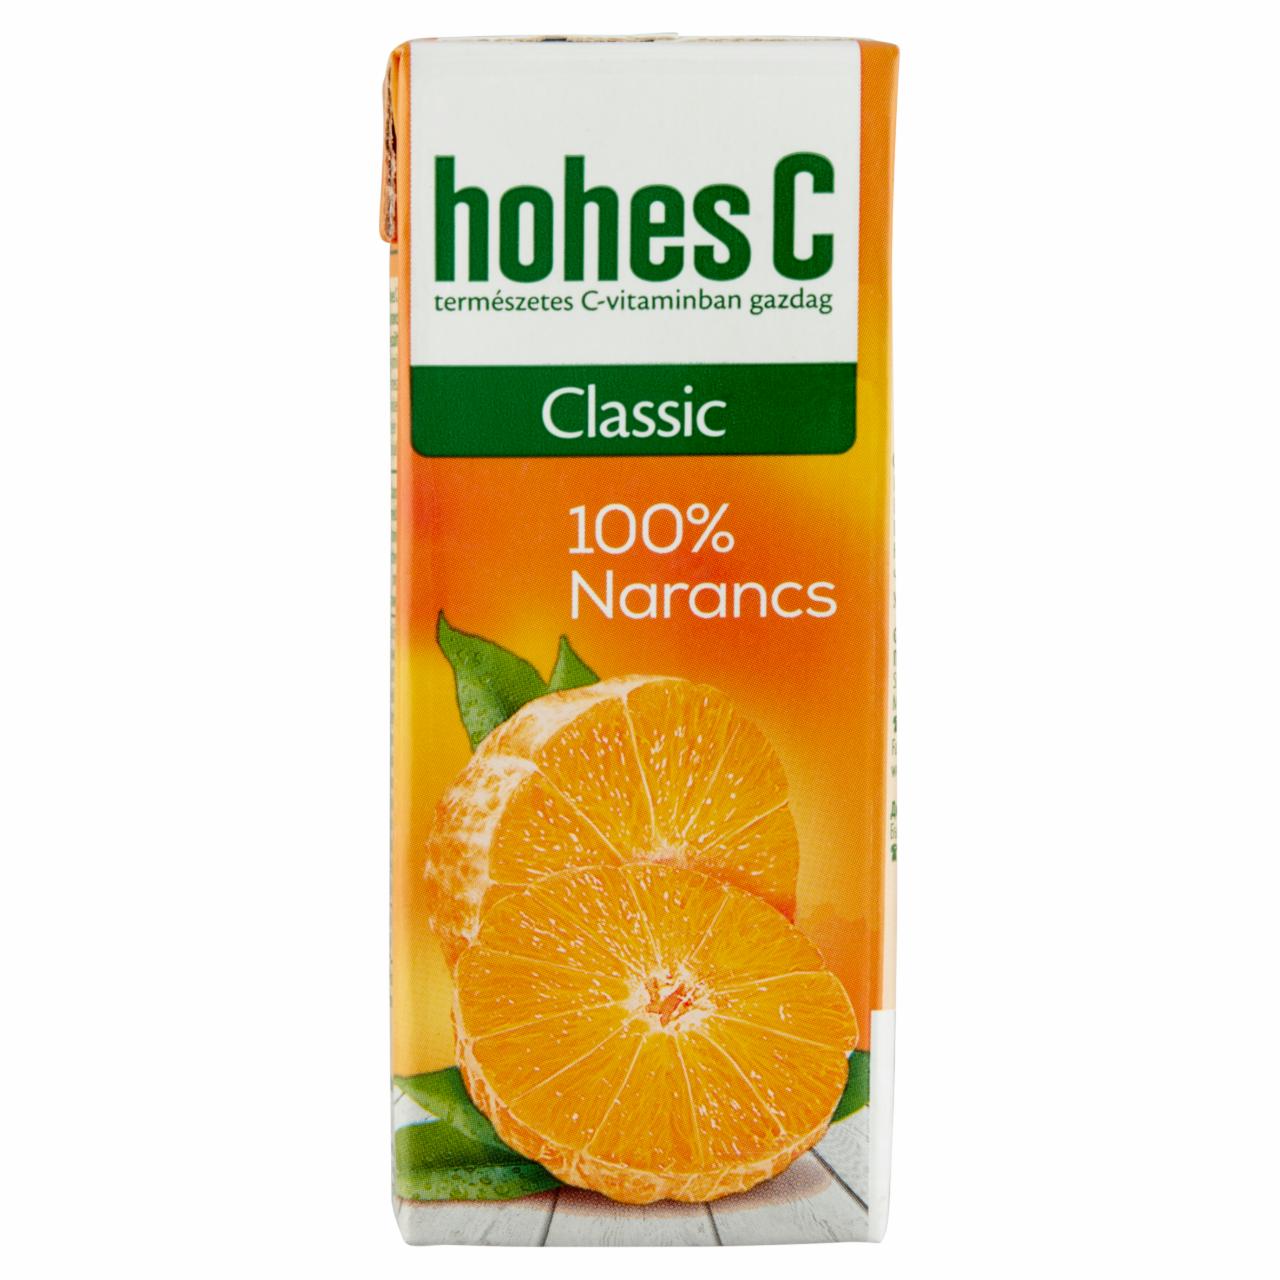 Képek - Hohes C Classic 100% narancslé 0,2 l